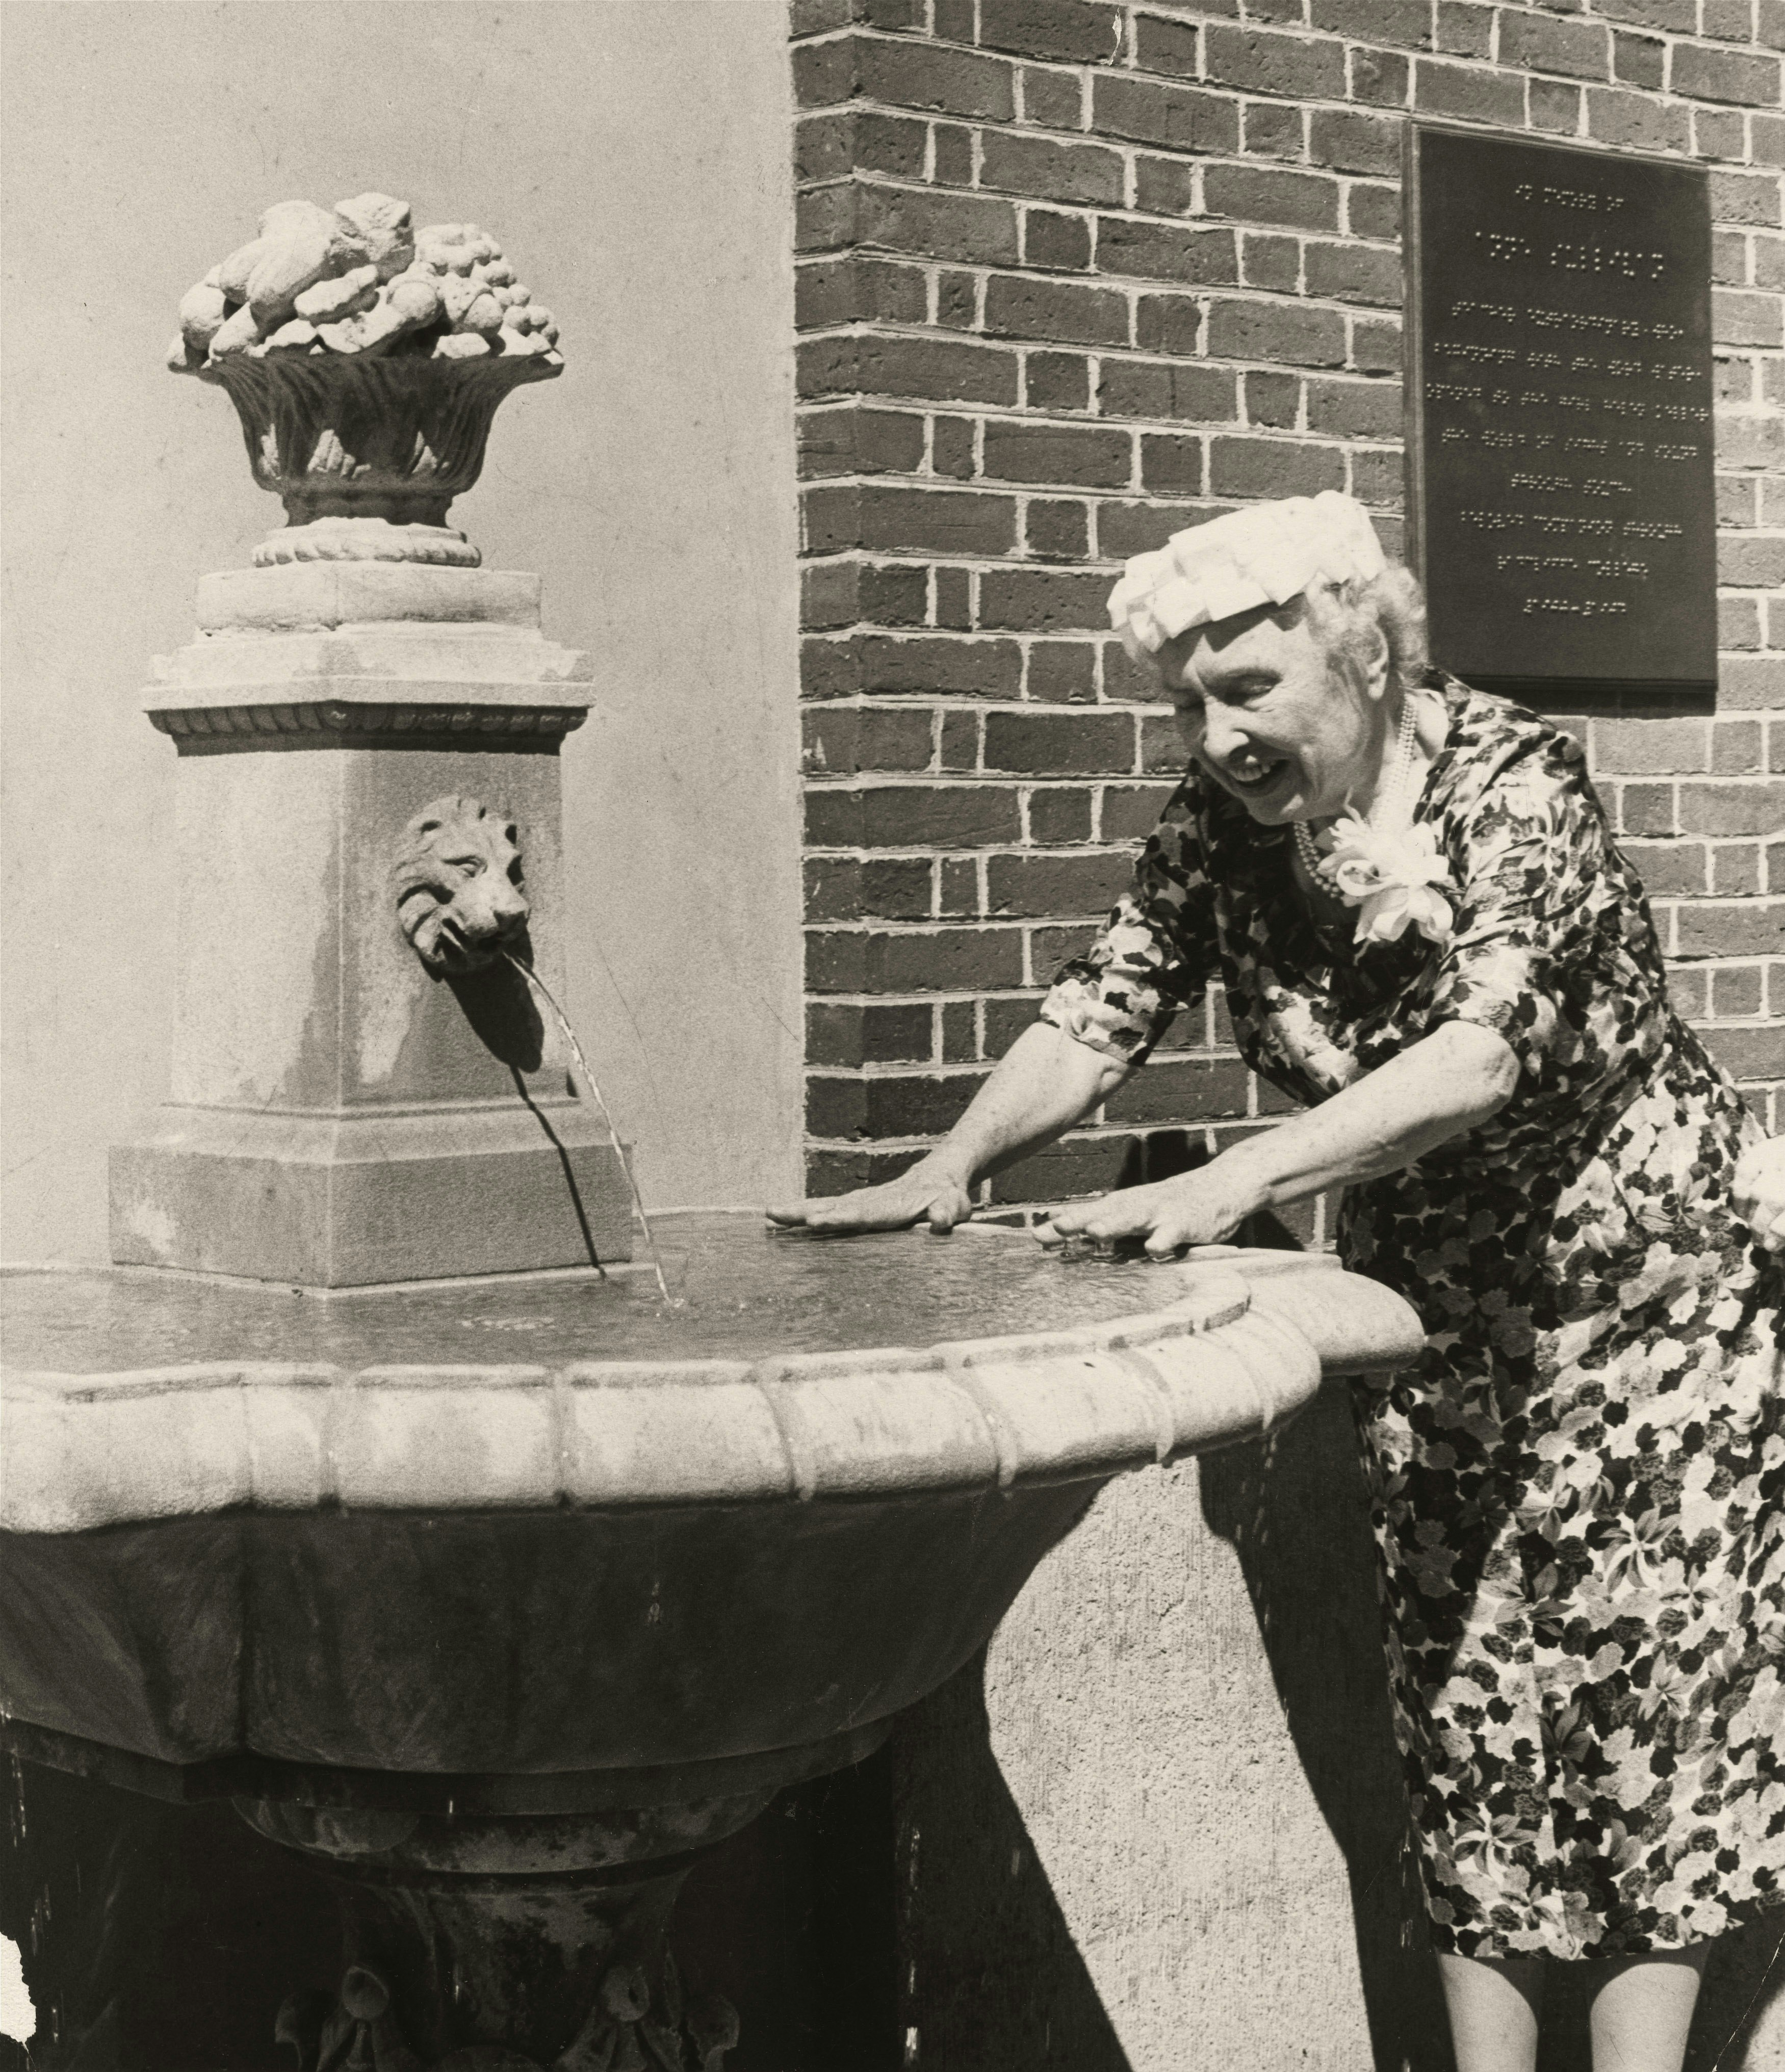 Helen Keller at the dedication of the Annie Sullivan memorial fountain